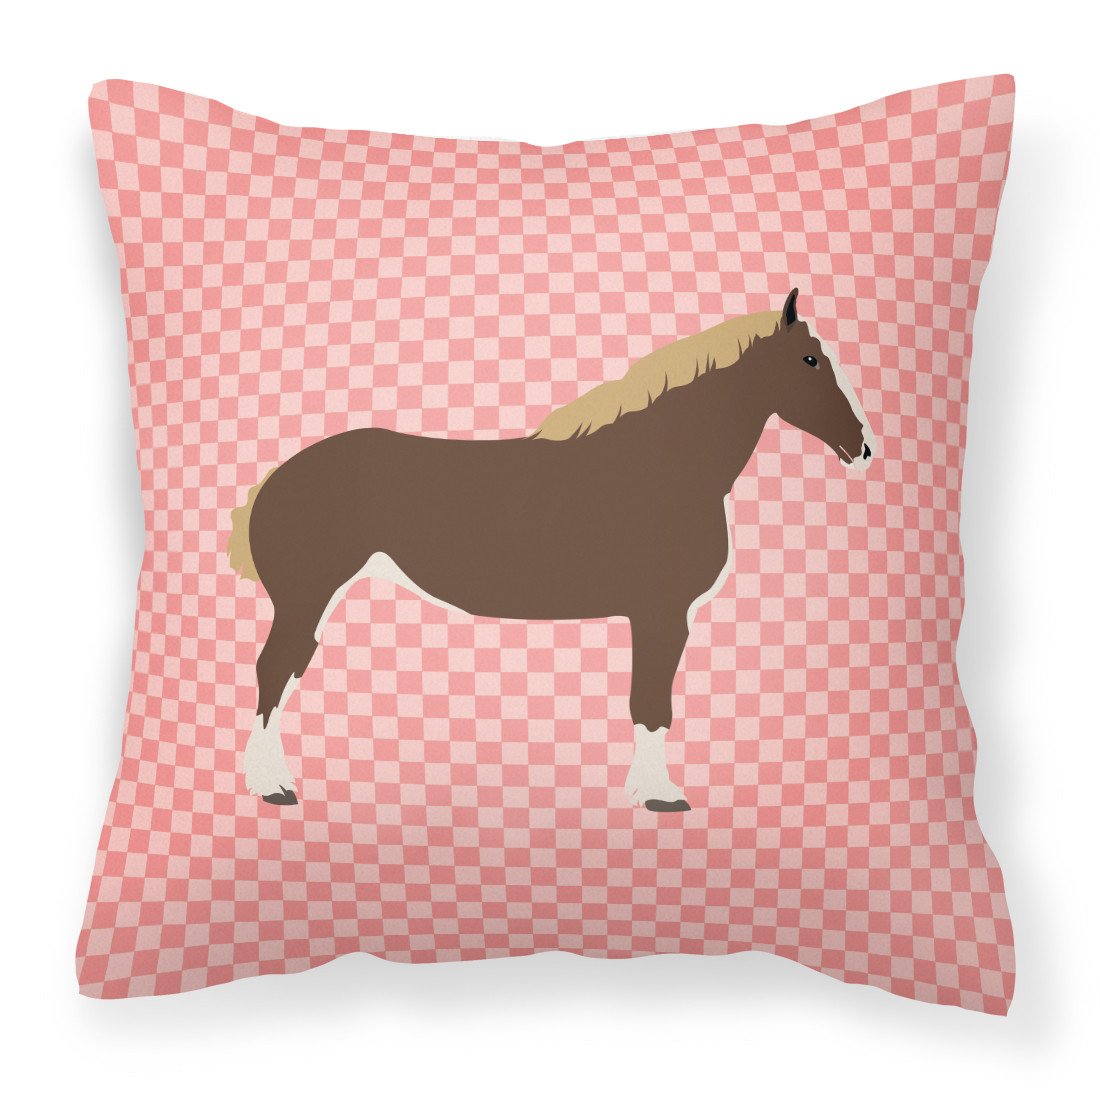 Percheron Horse Pink Check Fabric Decorative Pillow BB7906PW1818 by Caroline's Treasures